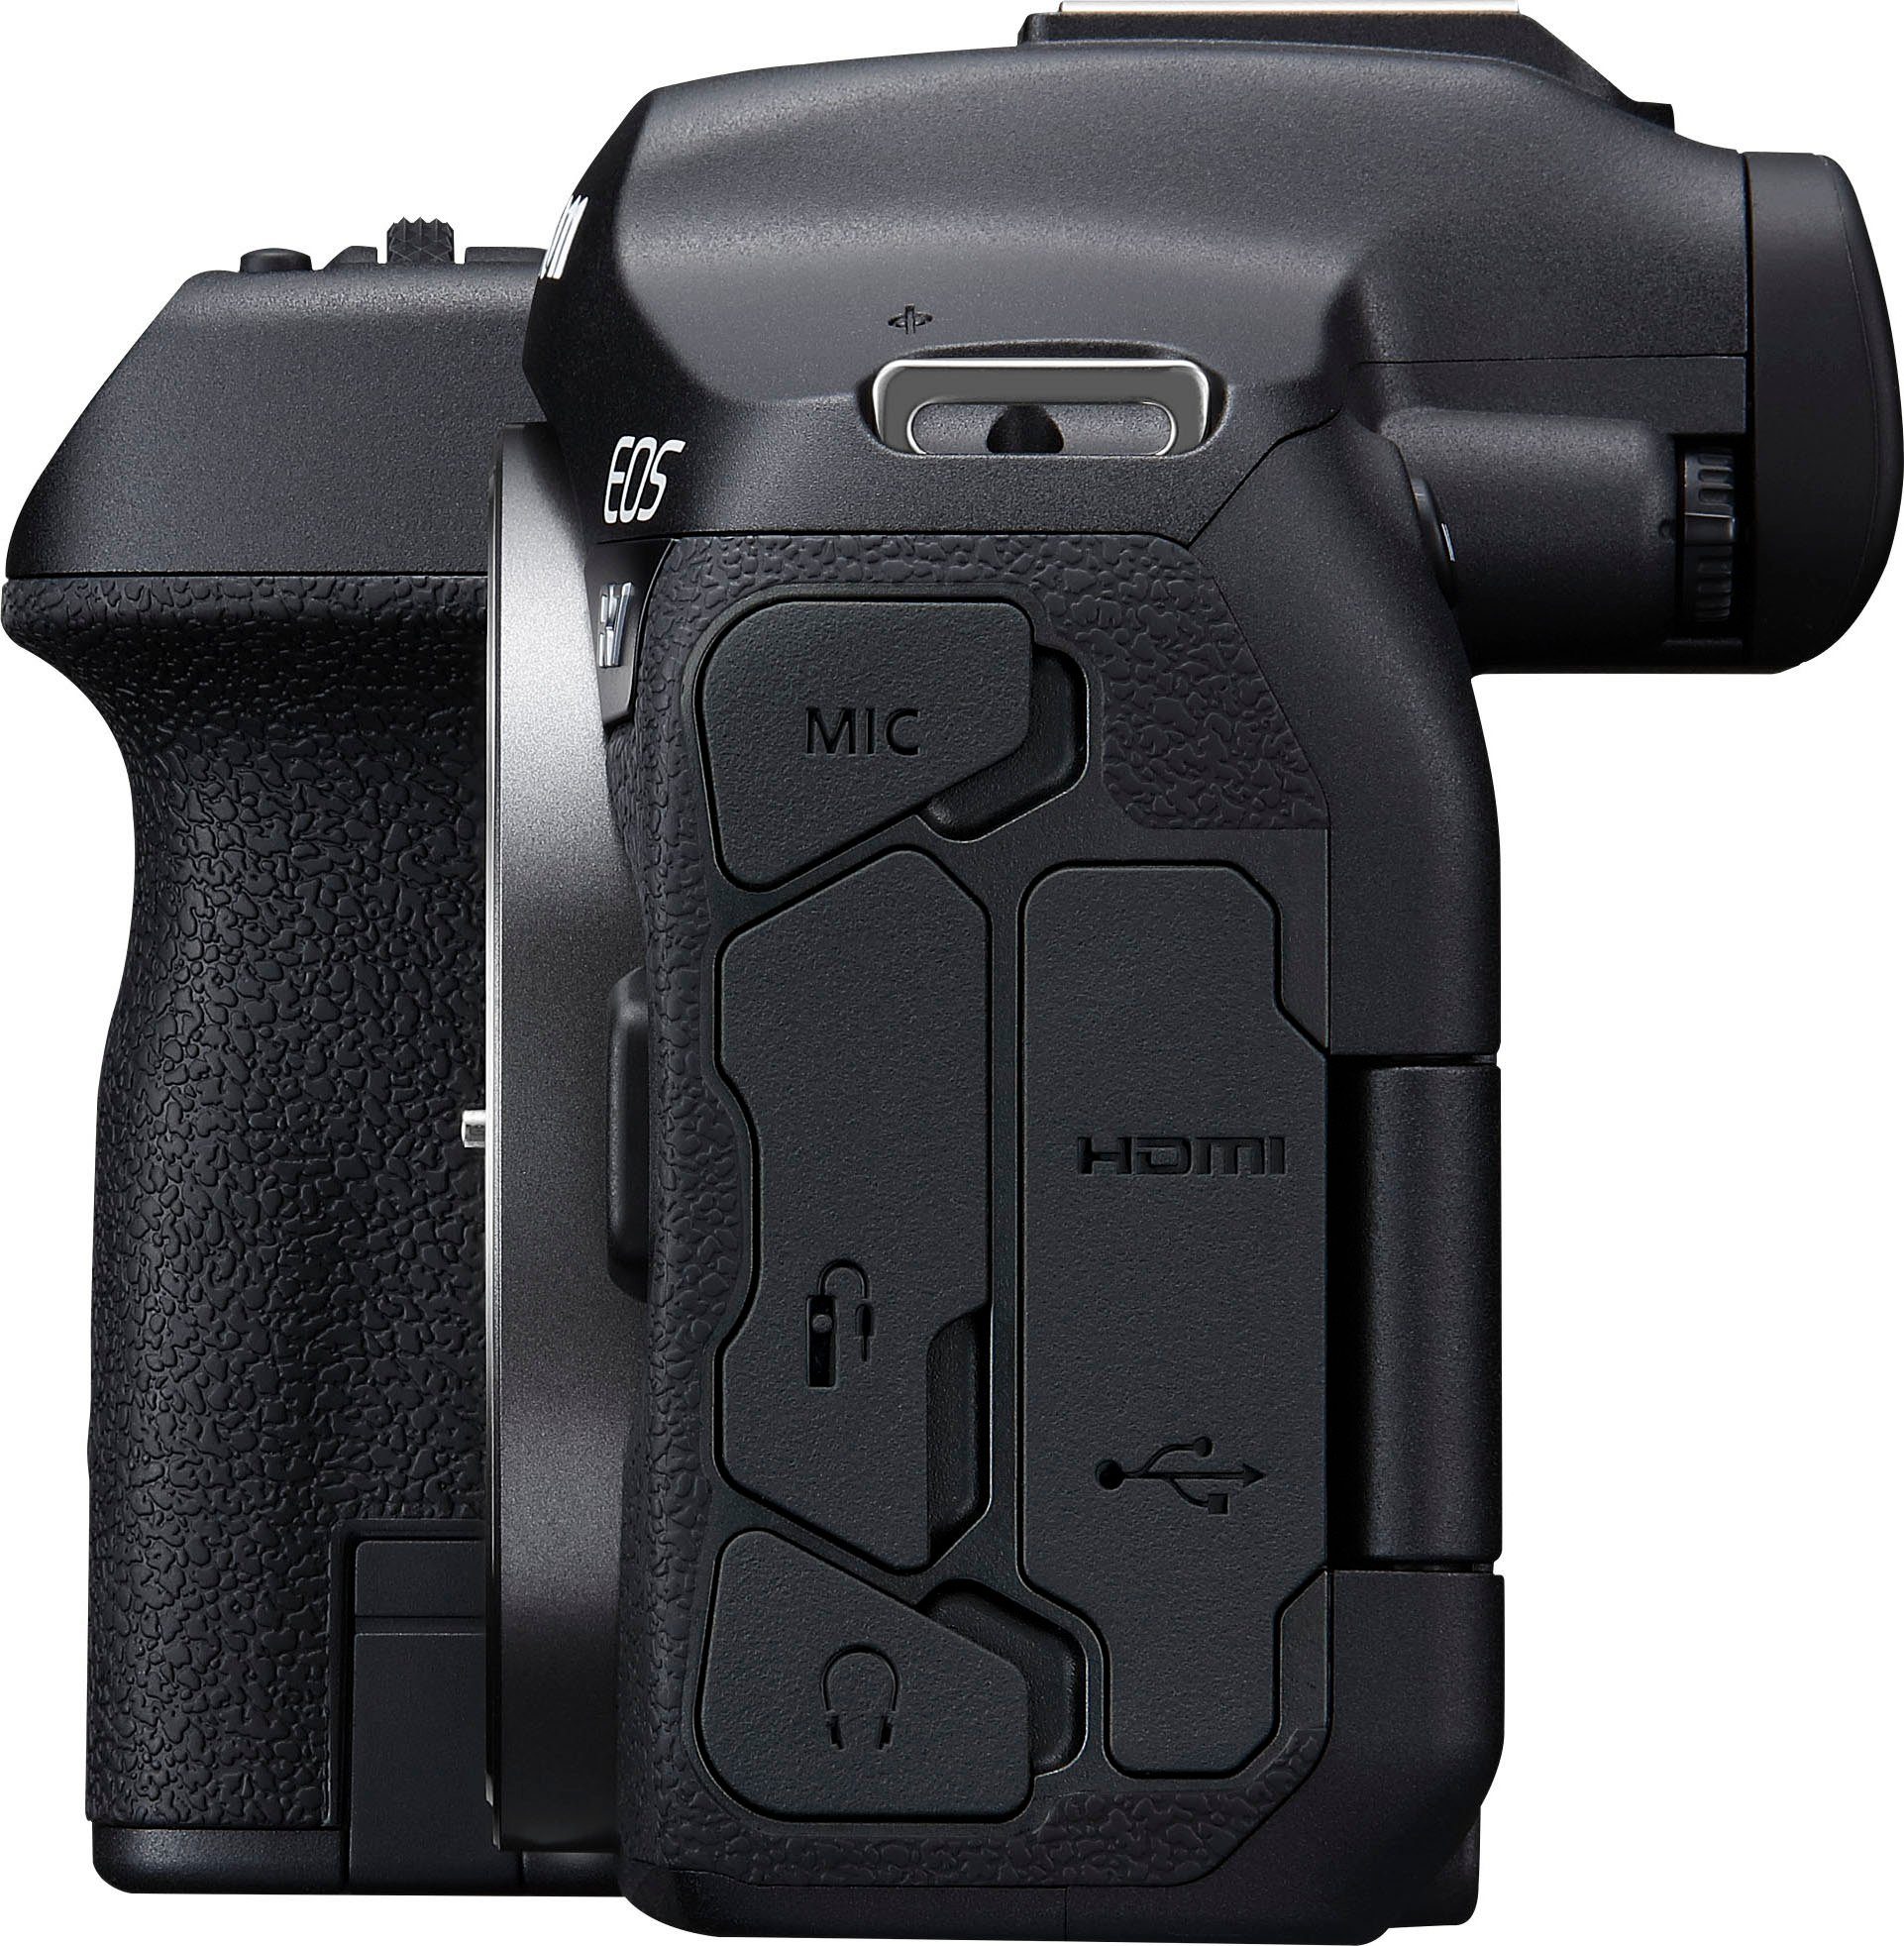 Body Bluetooth, MP, WLAN) (32,5 Canon EOS Systemkamera R7